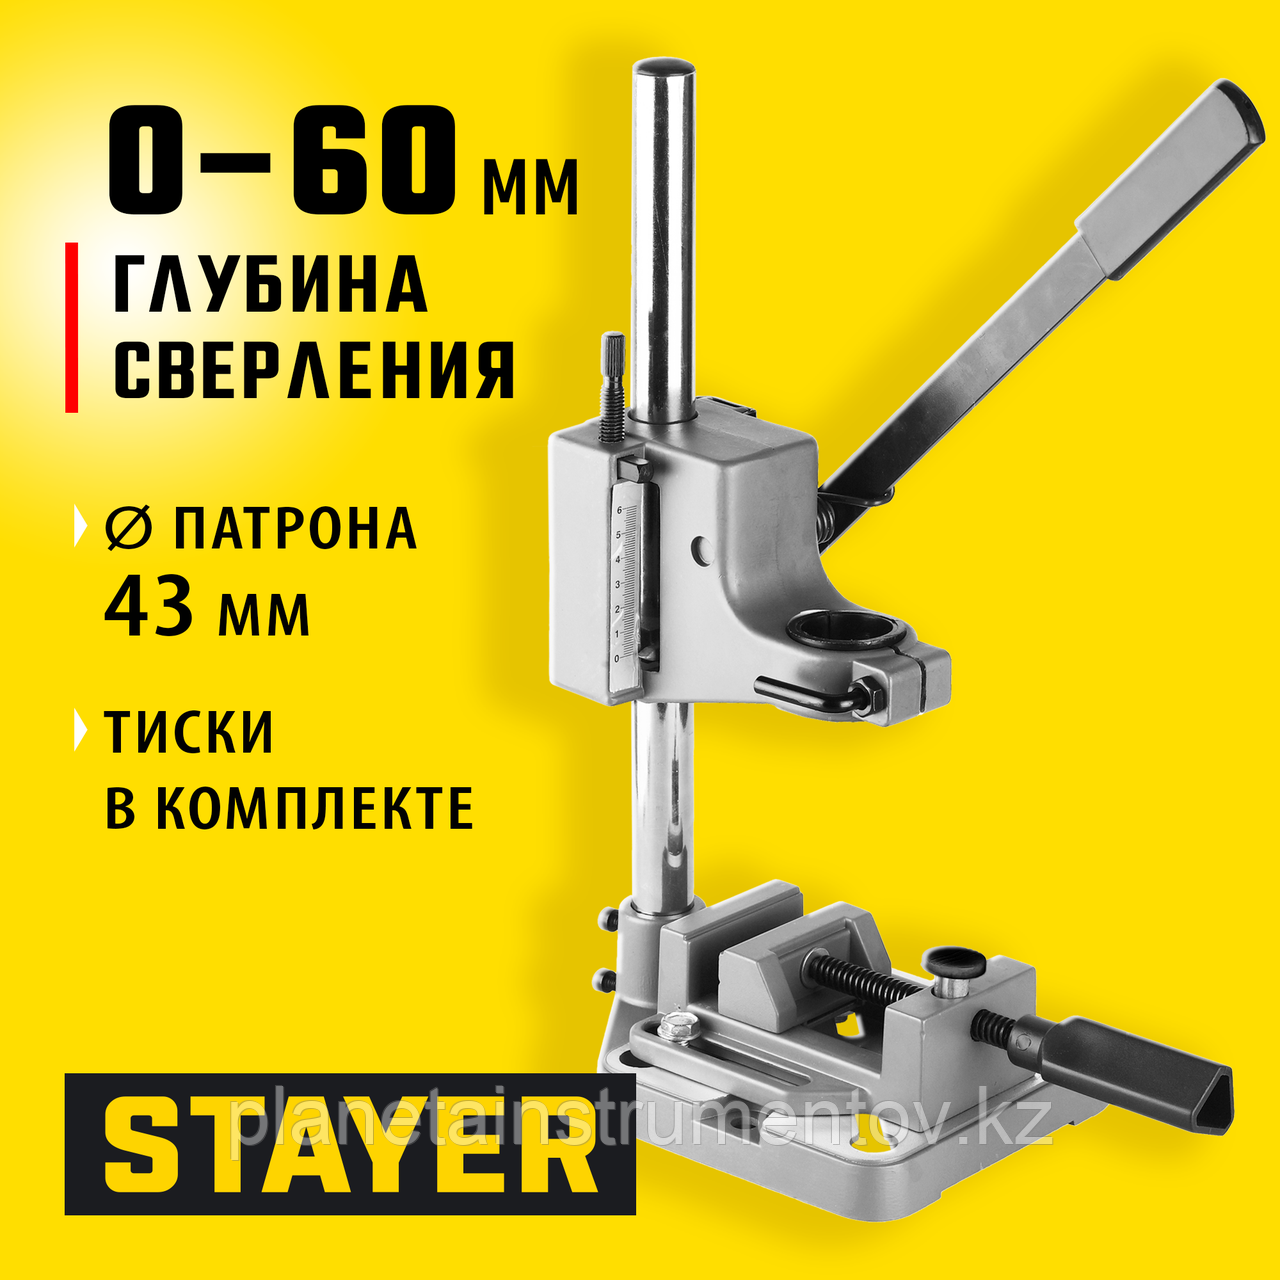 STAYER PROFISet стойка для дрели с тисками (32240)